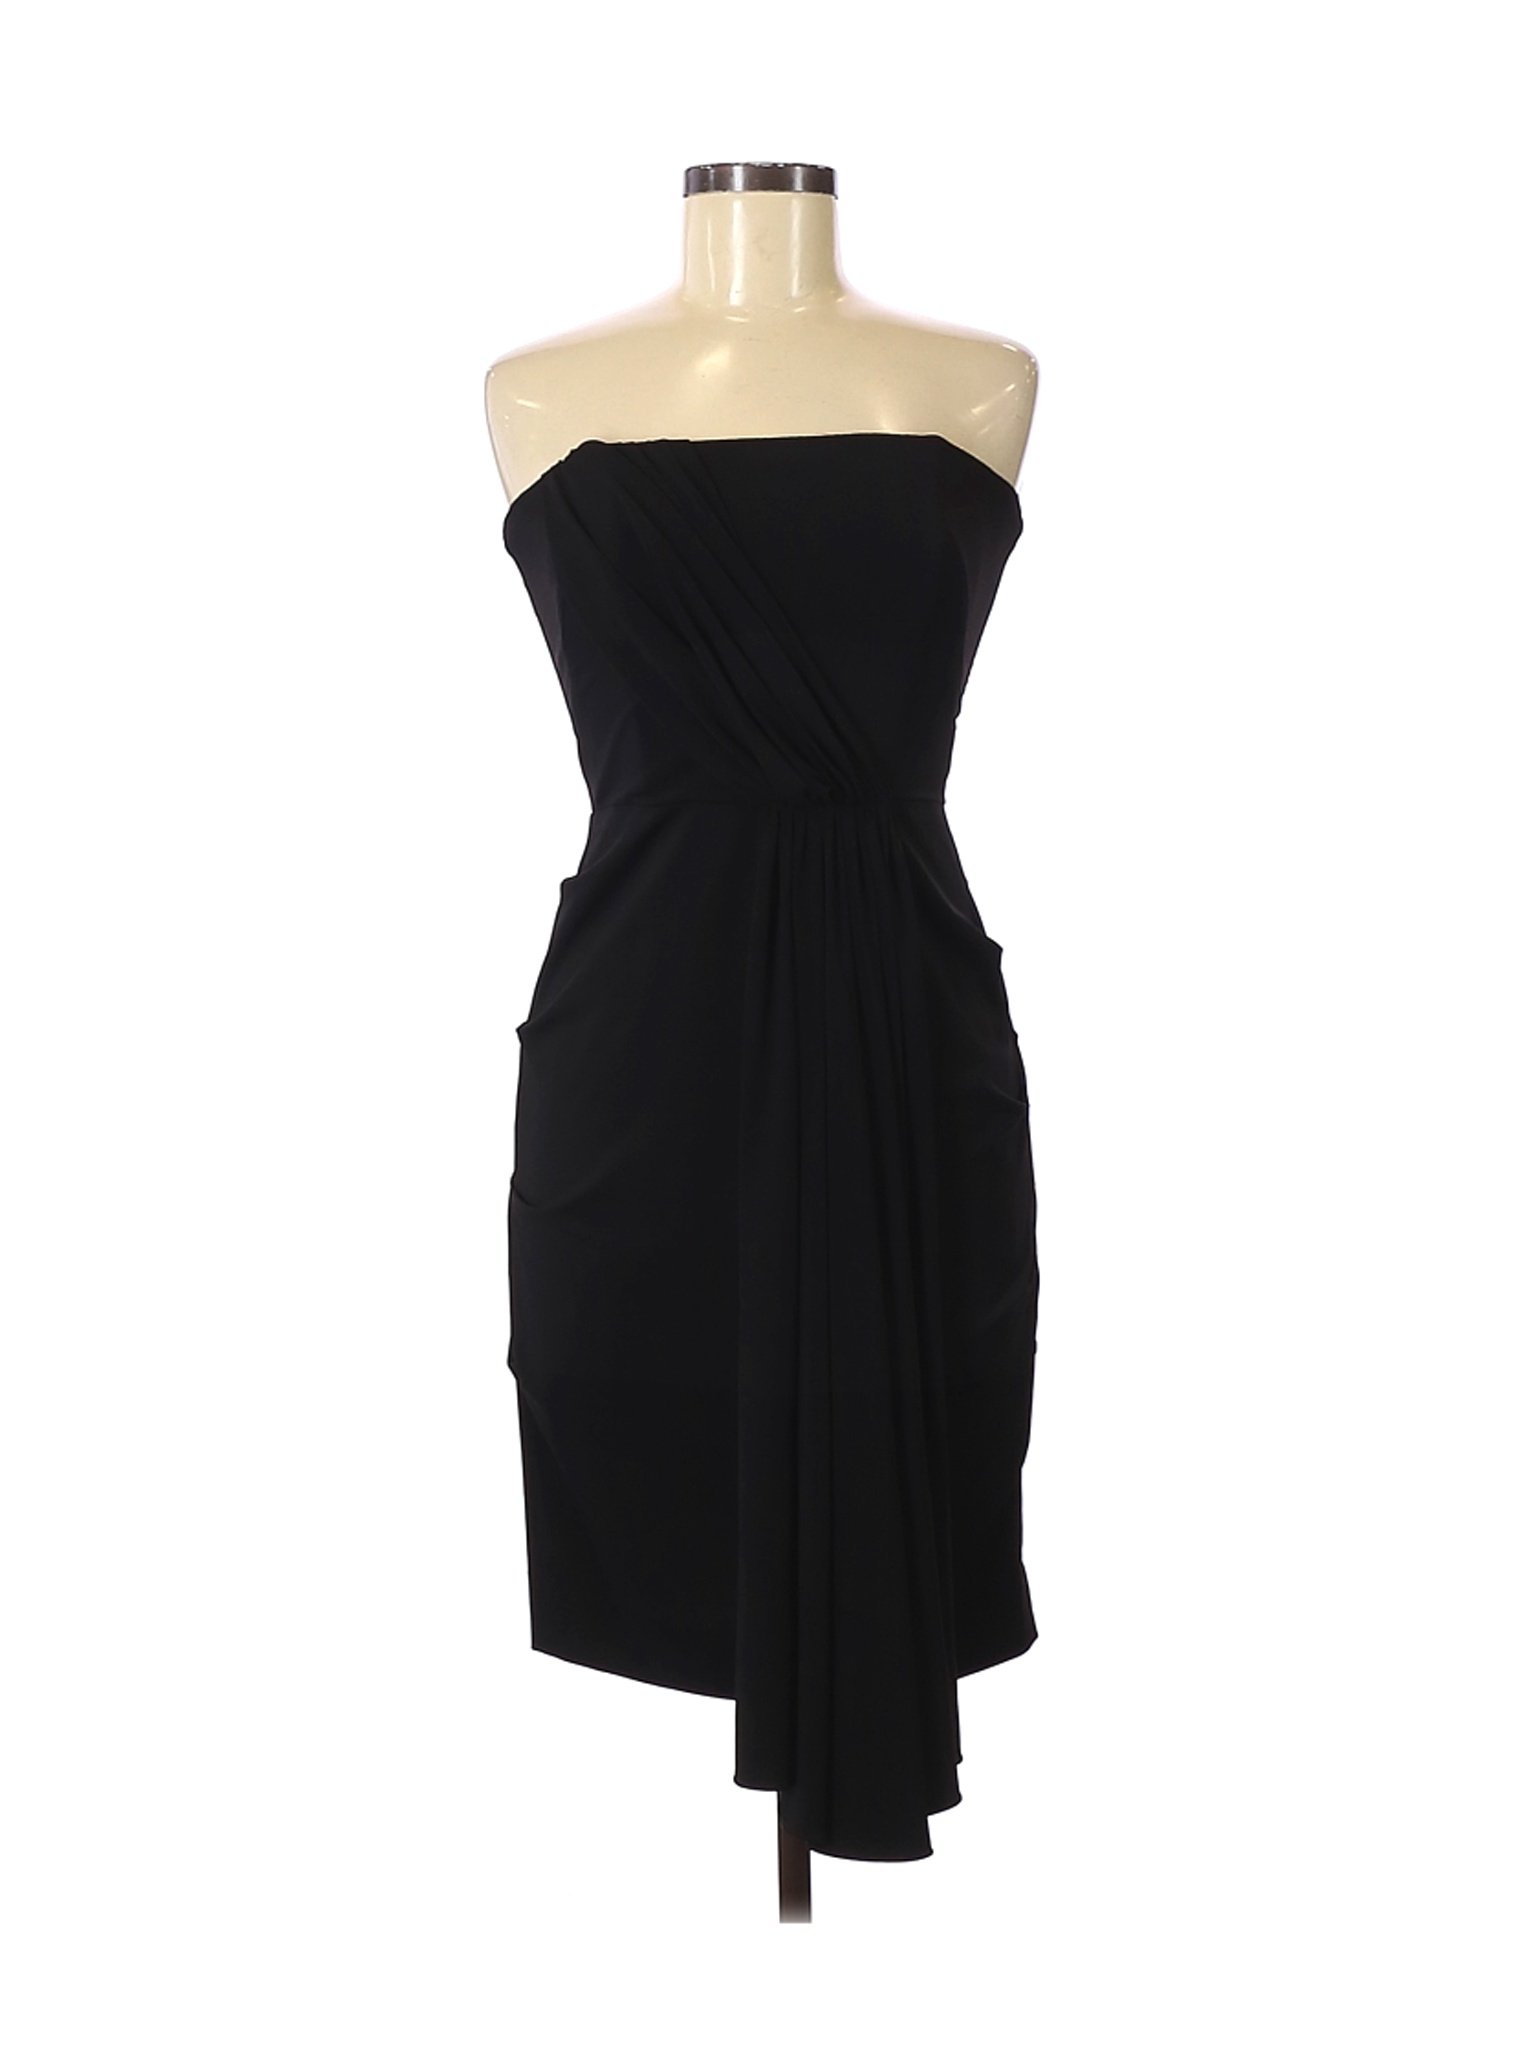 Nicole Miller Collection Women Black Cocktail Dress 6 | eBay